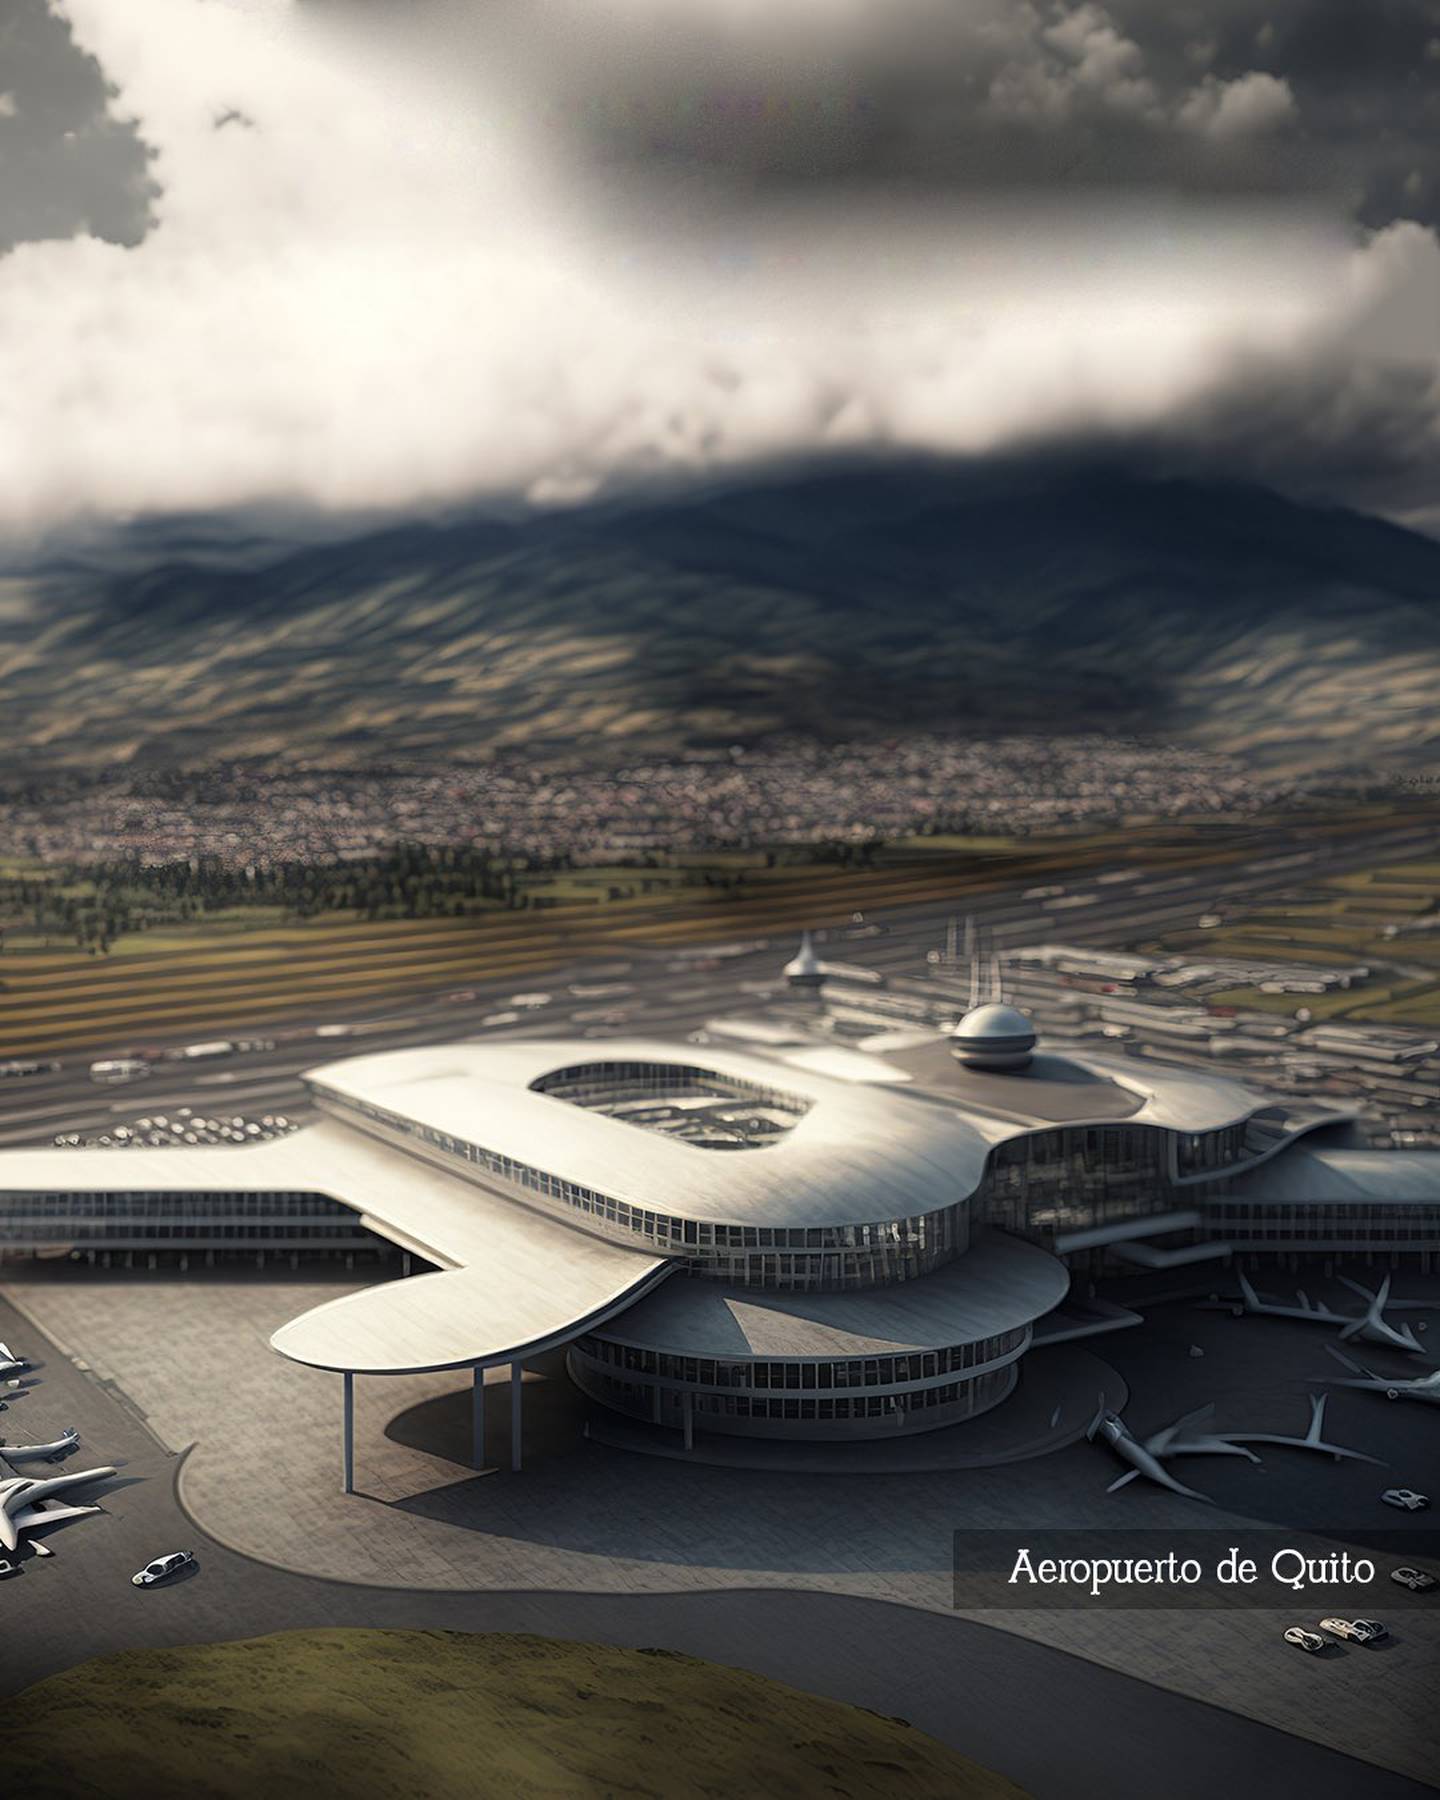 Aeropuerto de Quito según Inteligencia Artificial